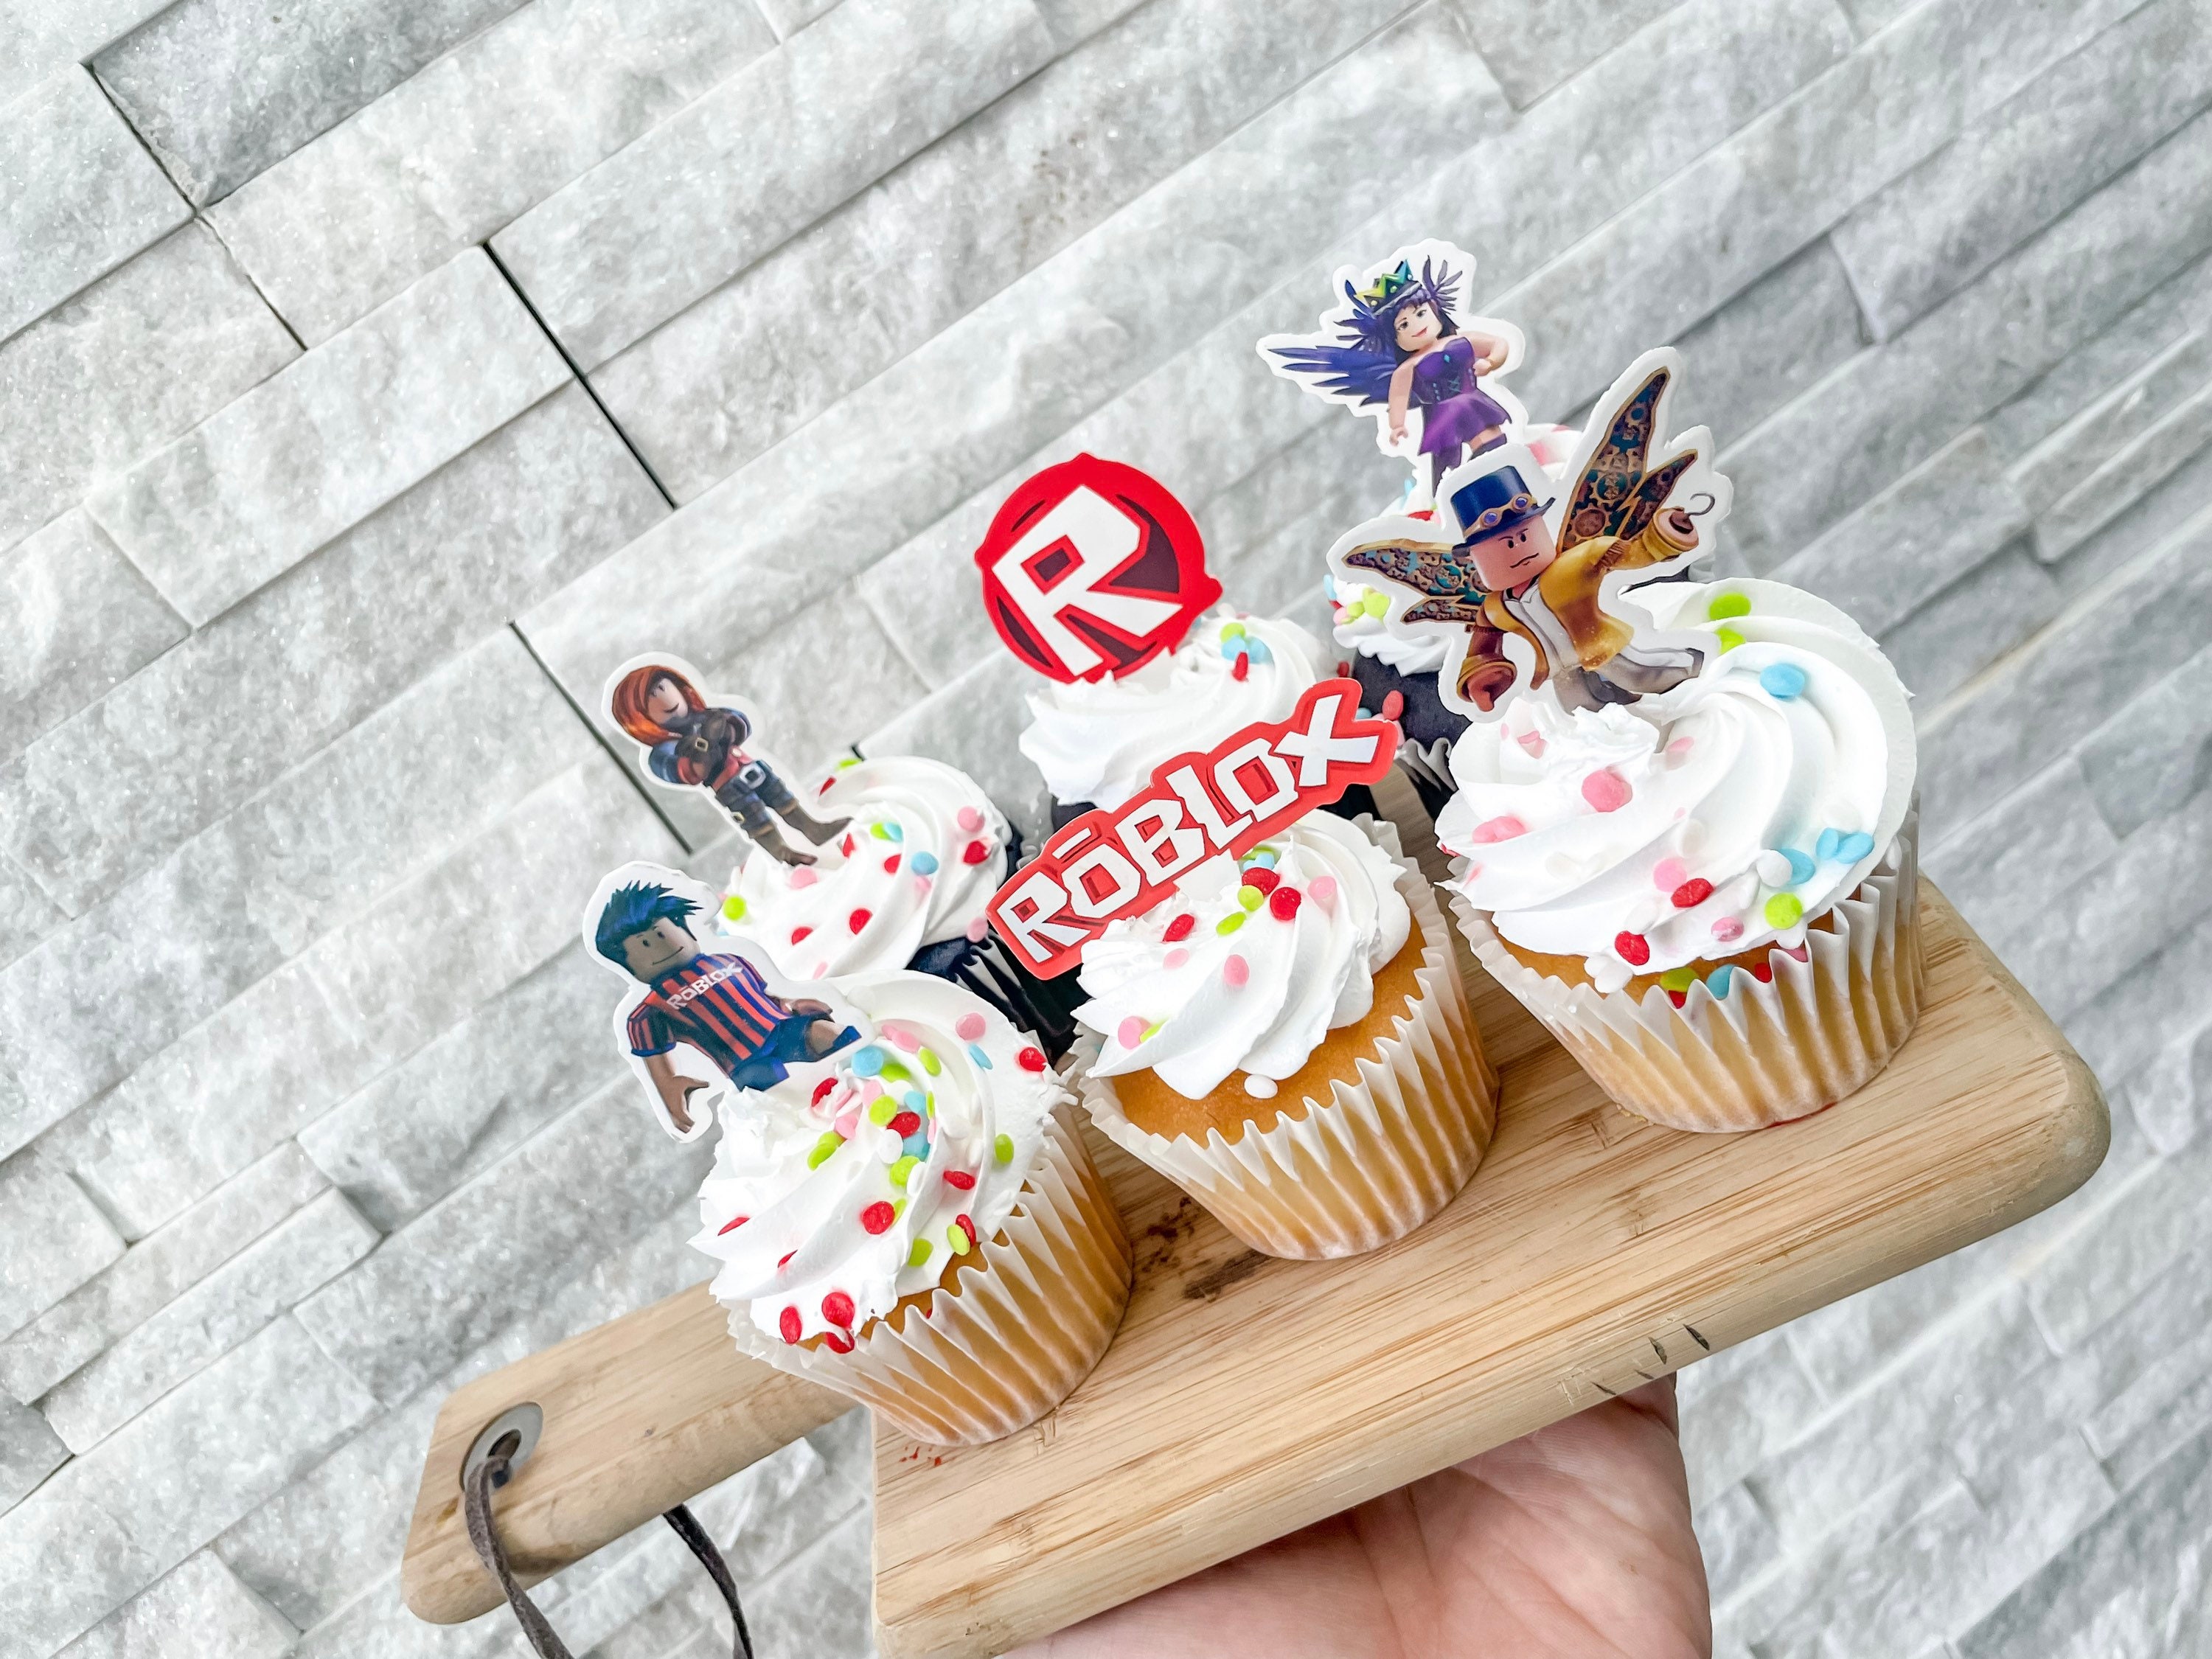 Pin em Cupcake 9th birthday Roblox theme